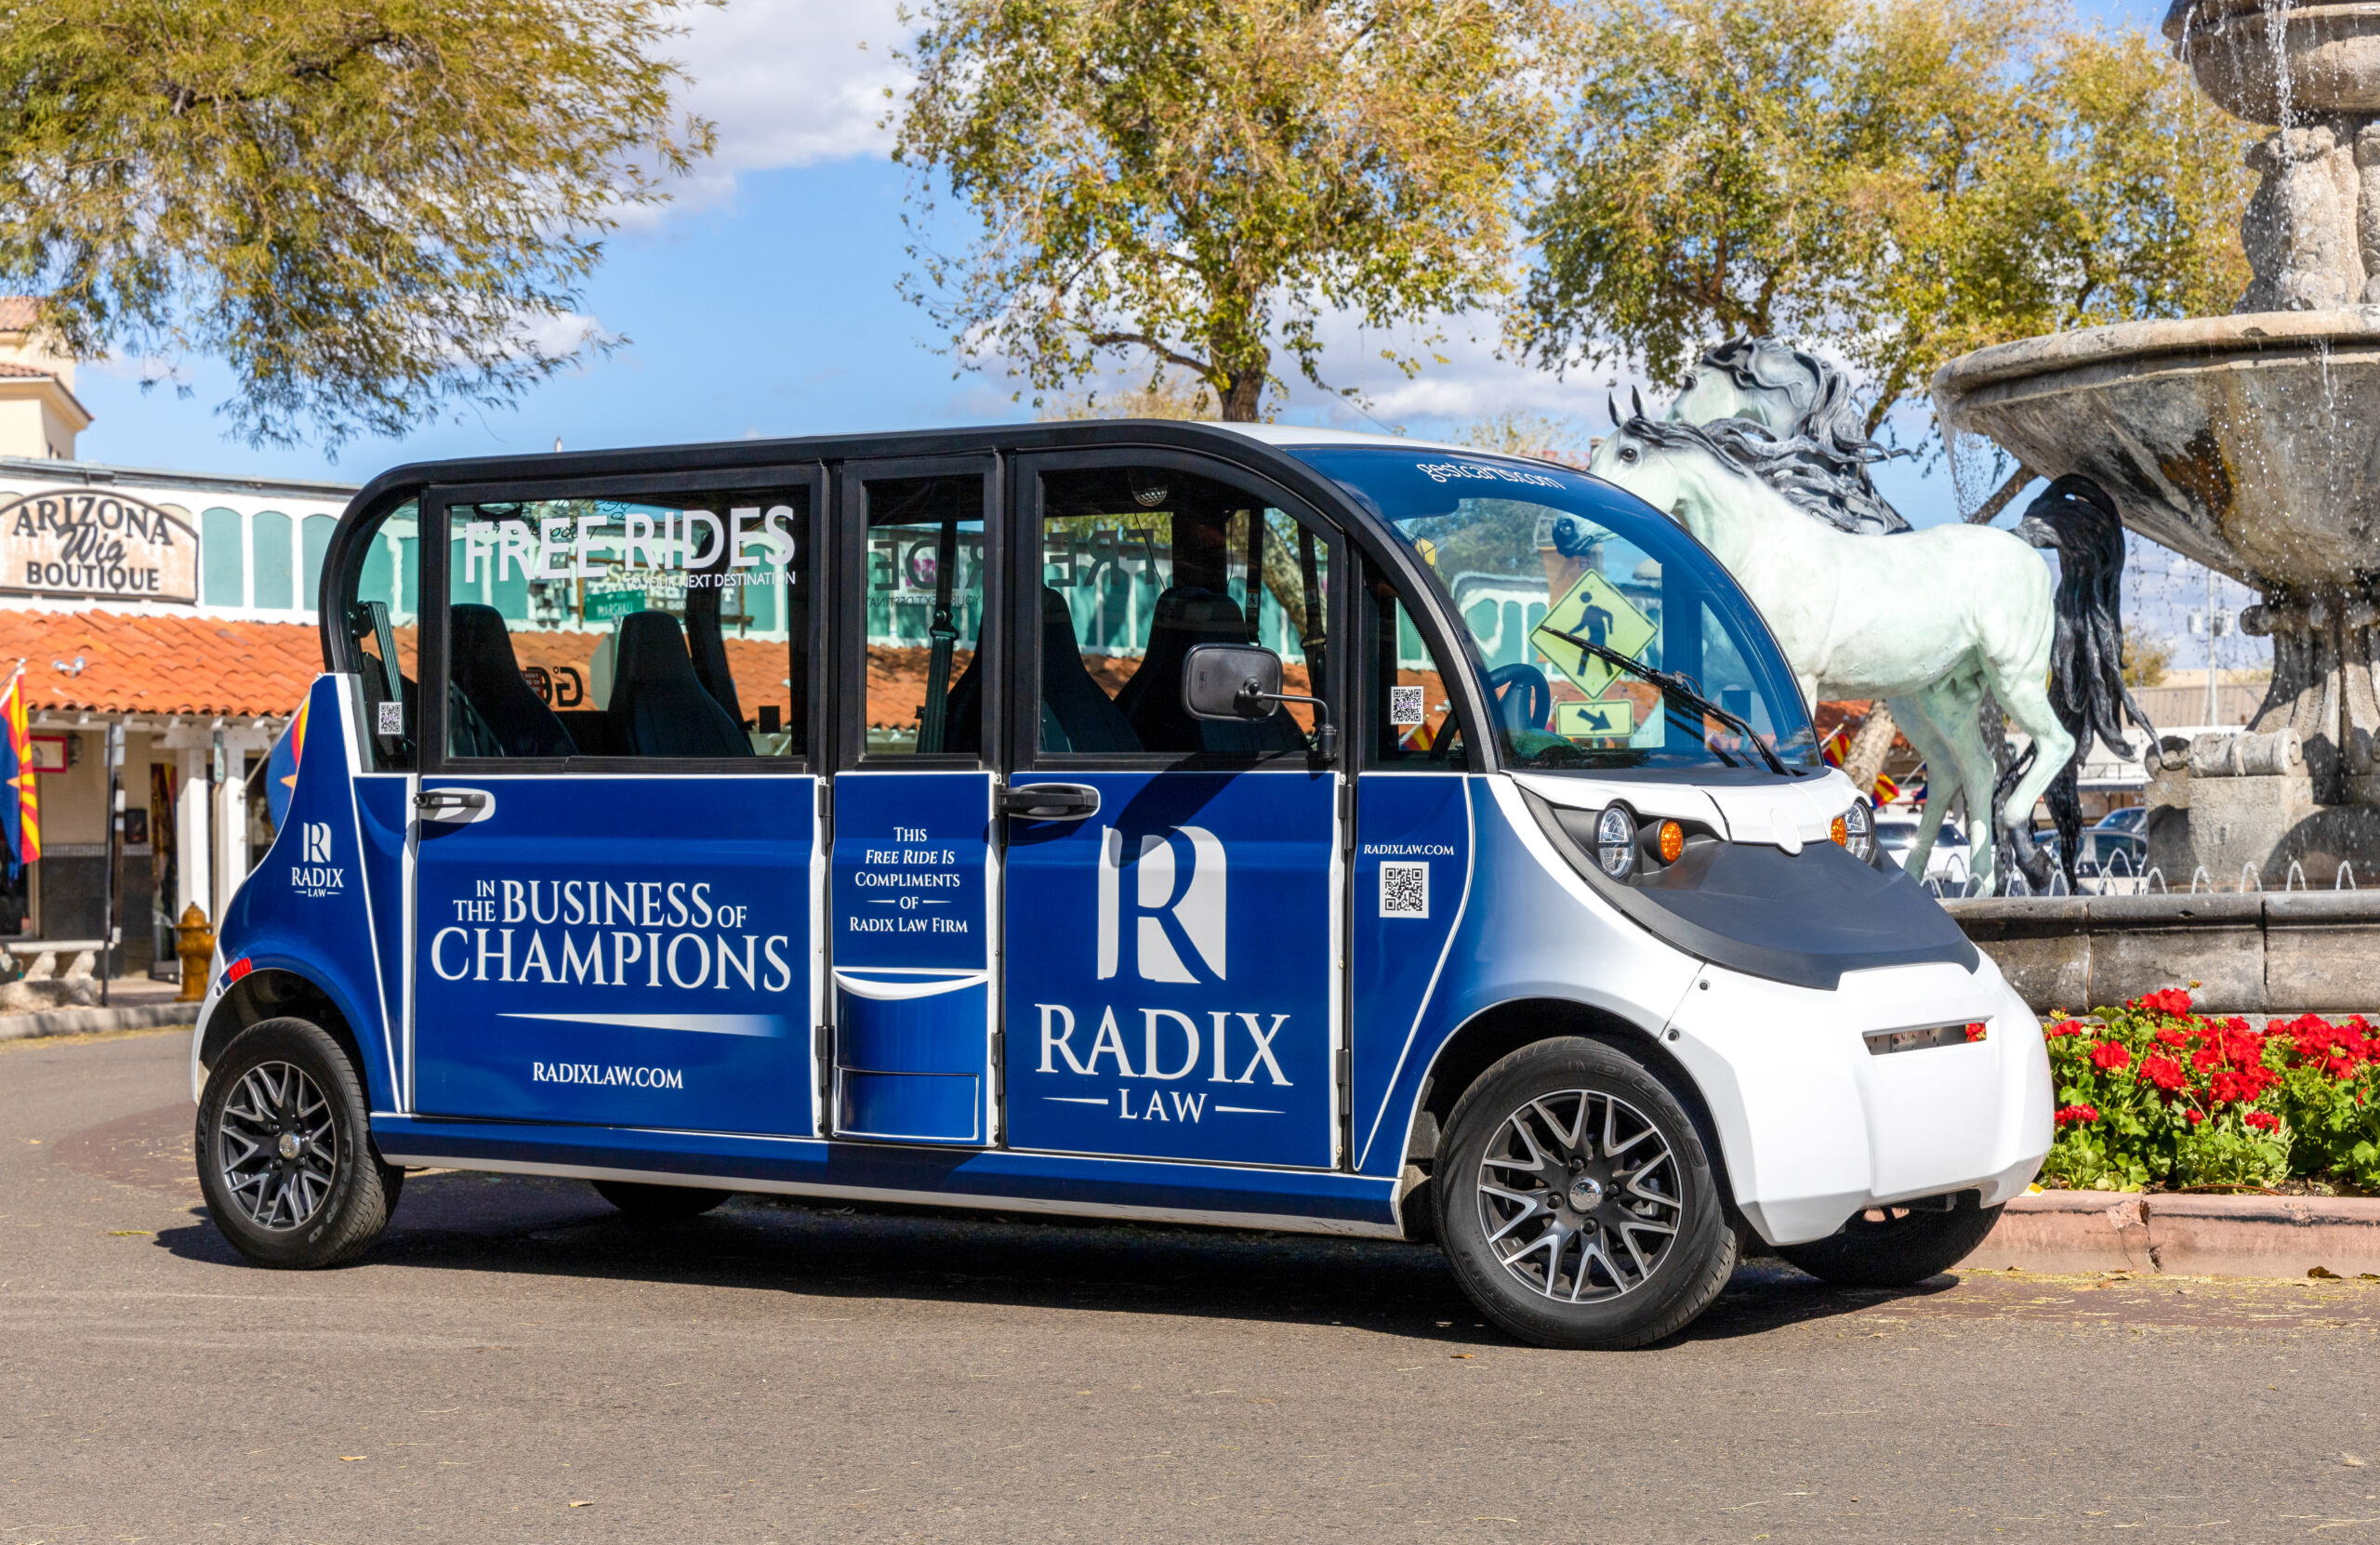 free green, easy, safe transportation alternative now available in Arizona